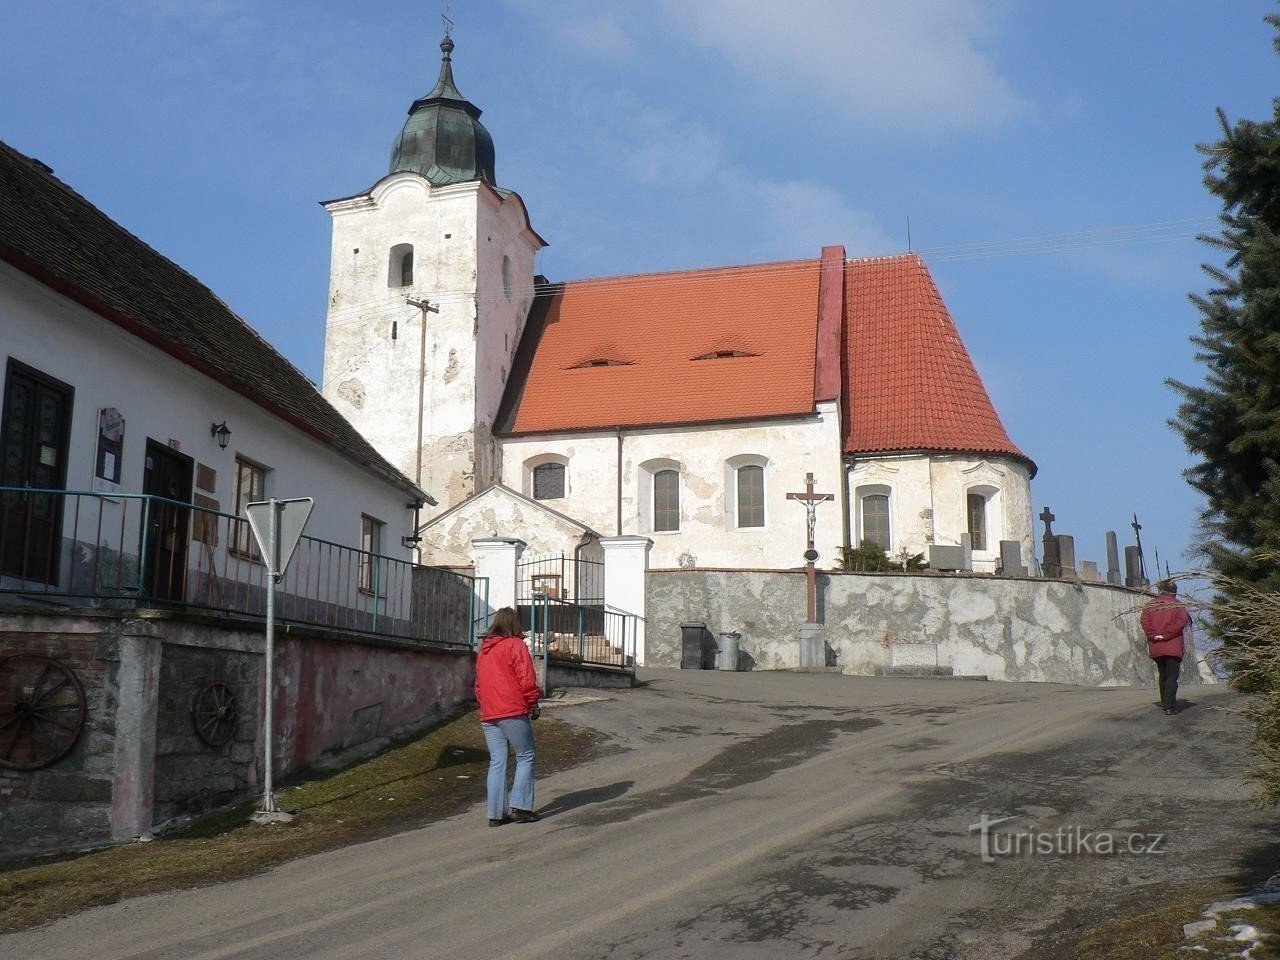 Bukovník, nhà thờ St. Wenceslas